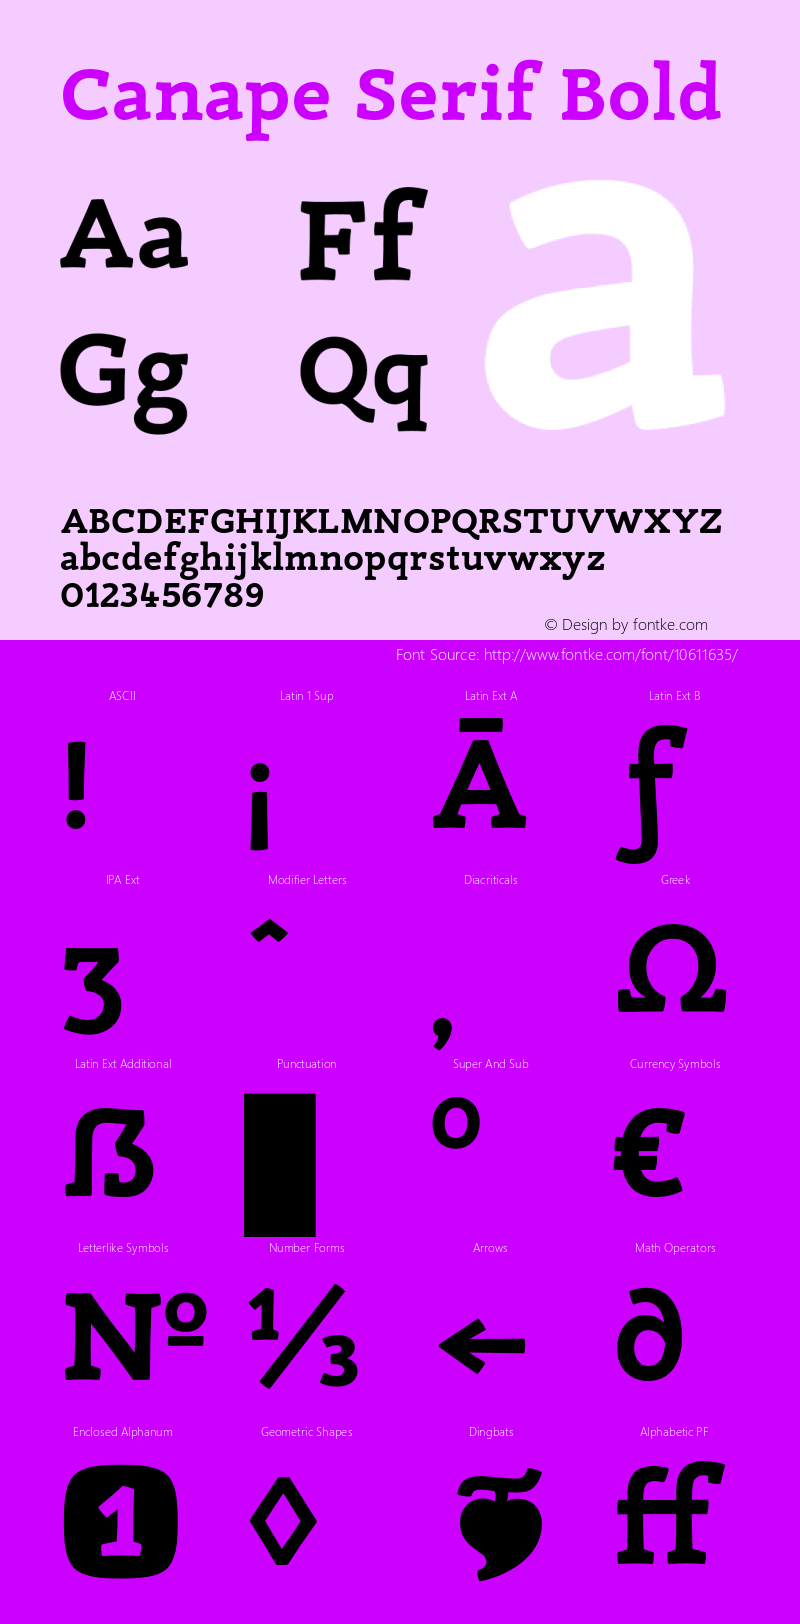 Canape Serif Bold Version 1.000 Font Sample